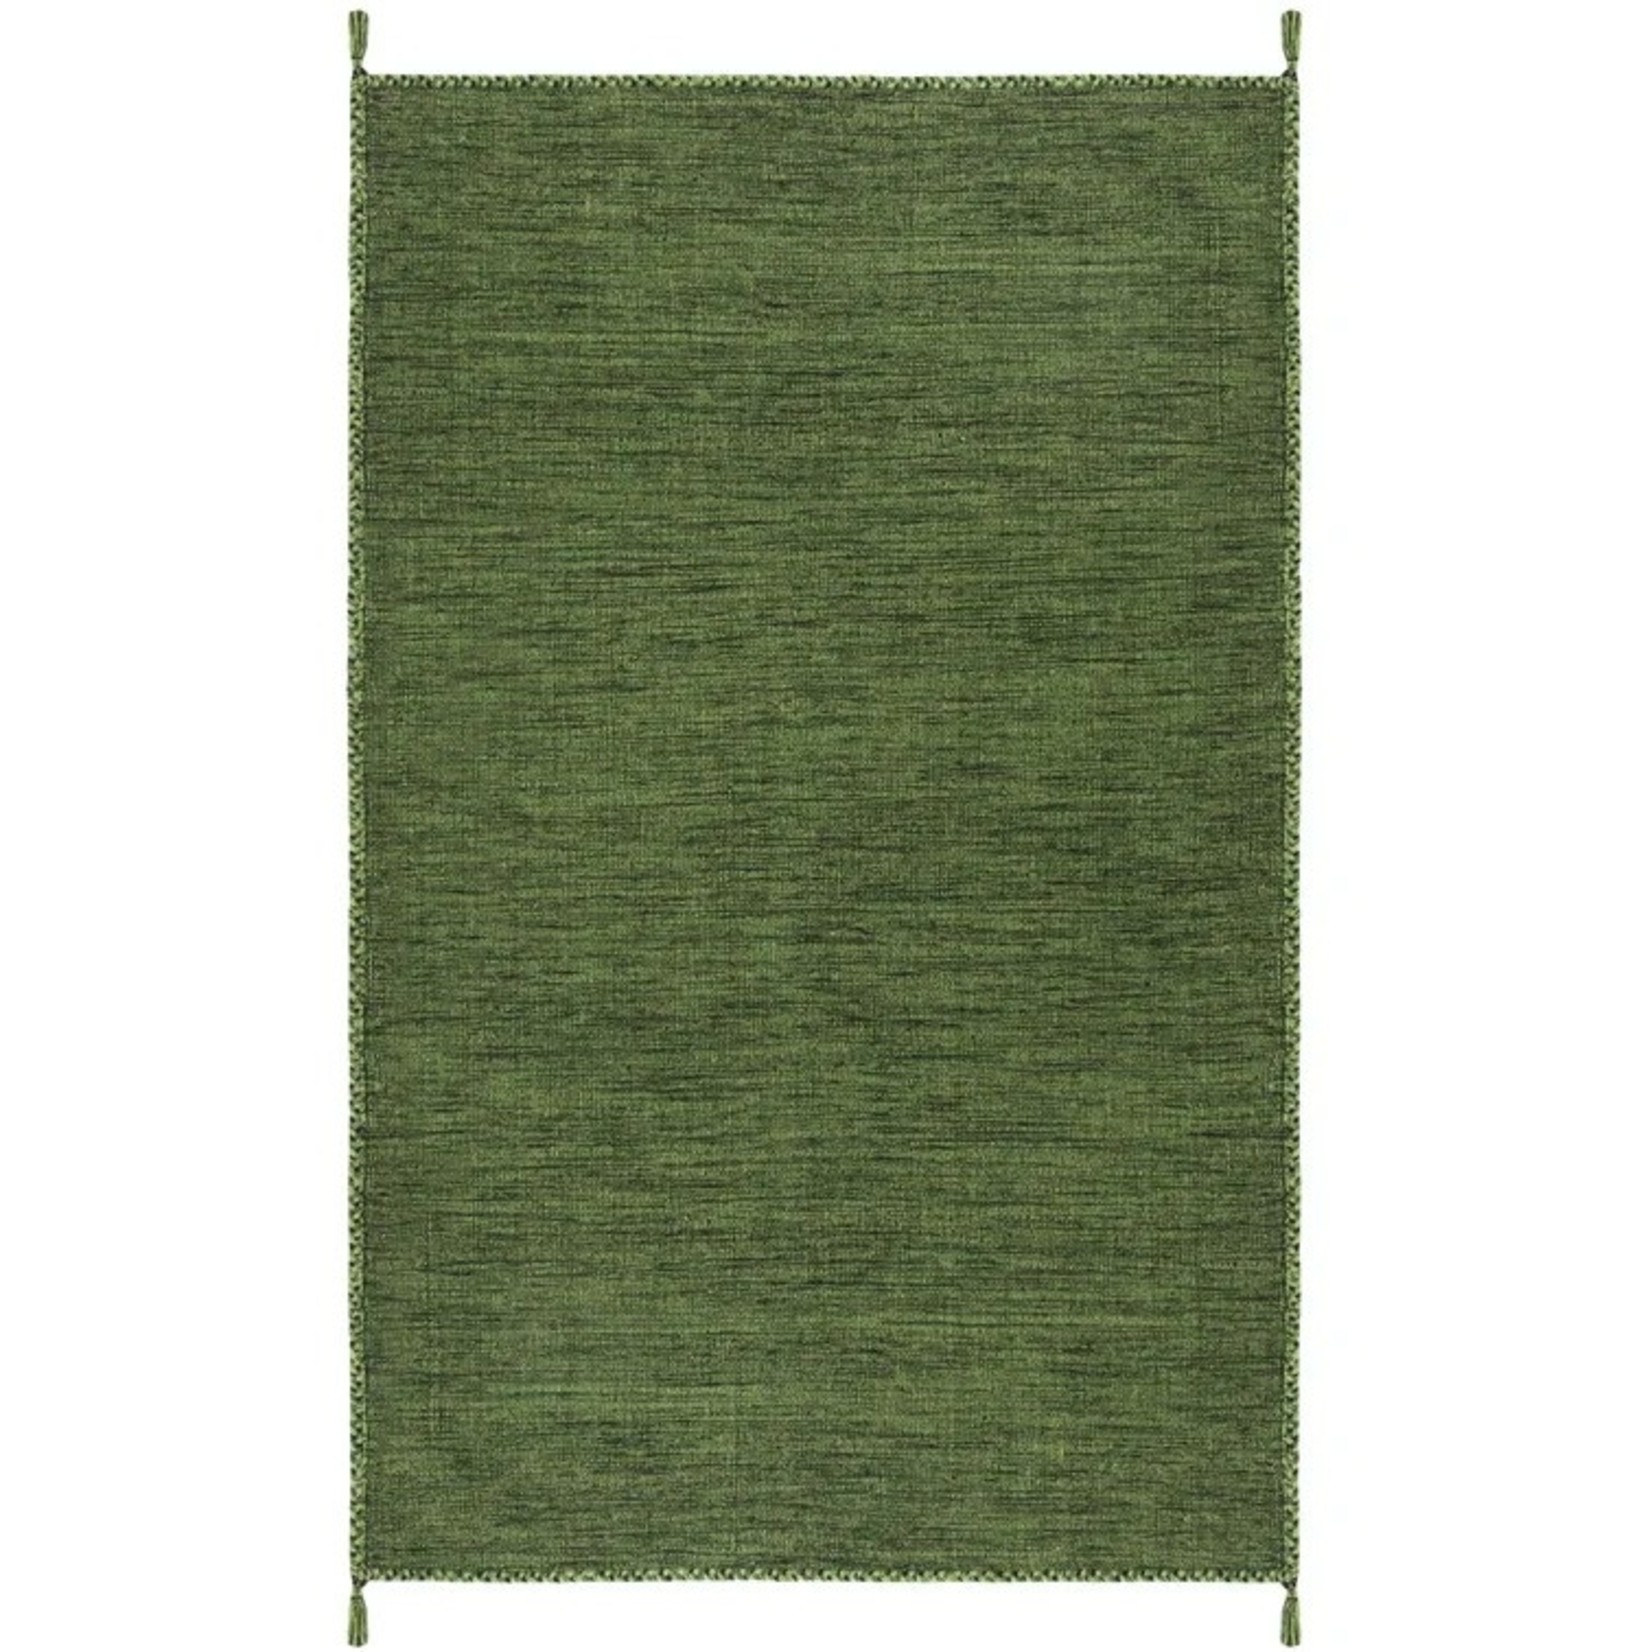 *2' x 3' Amaral Hand-Woven Cotton Green/Black Area Rug